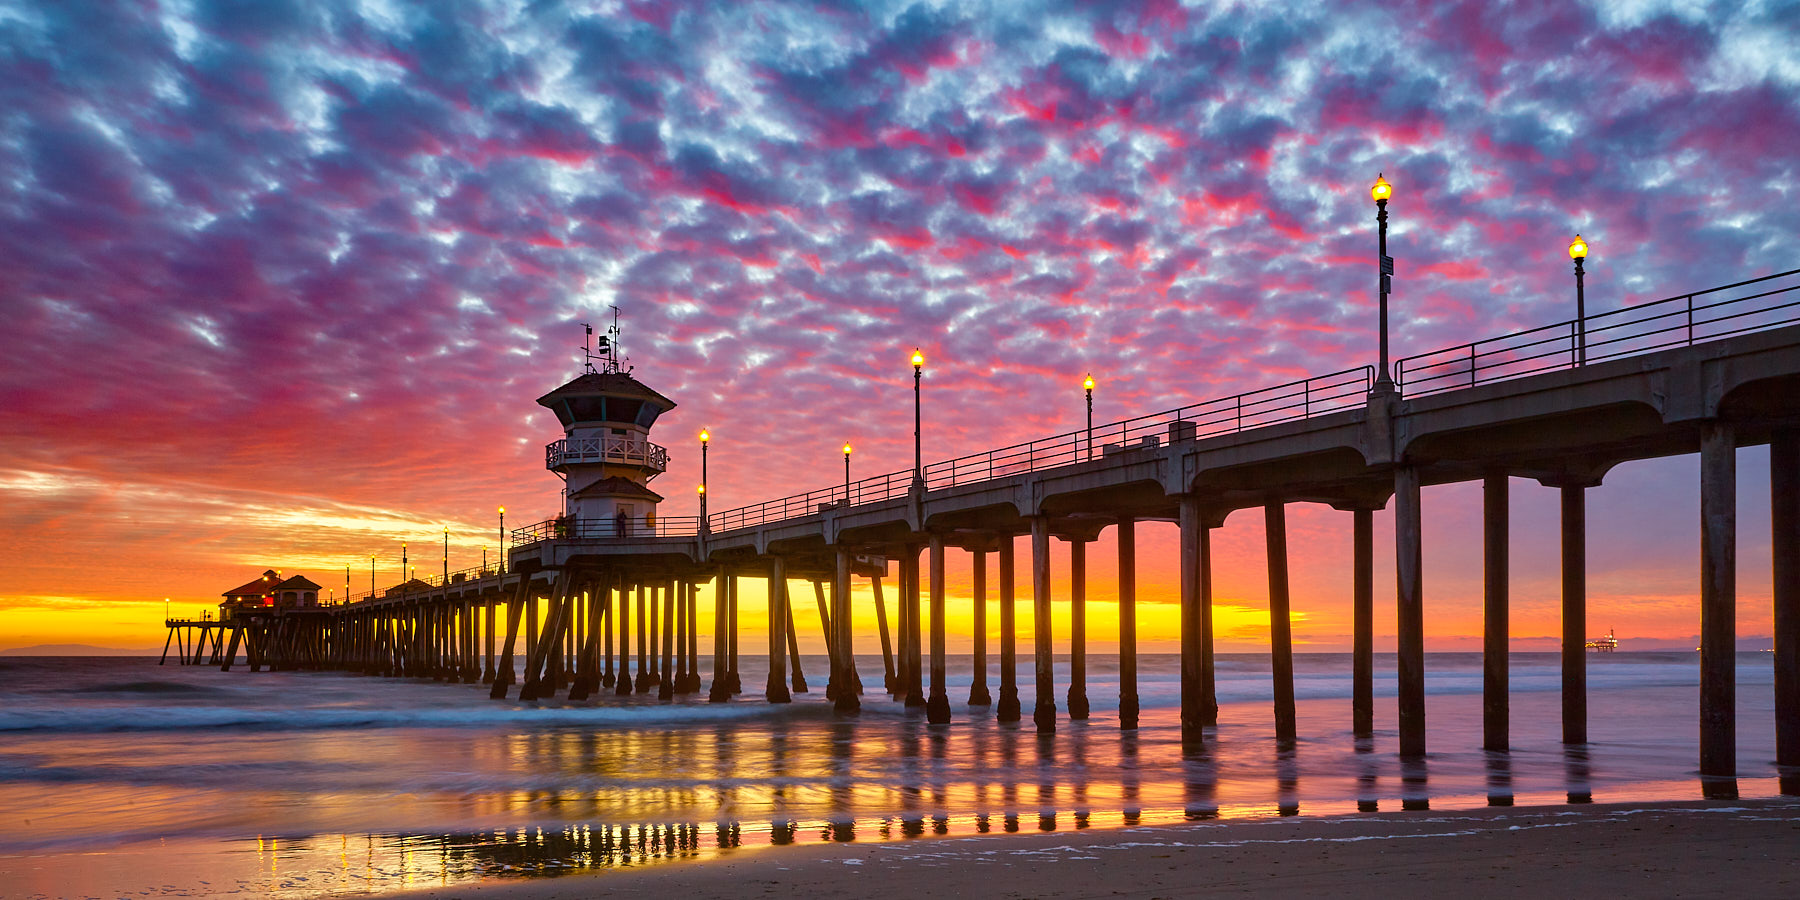 panoramic image of sunset at the beautiful Huntington Beach pier in Huntington Beach, California